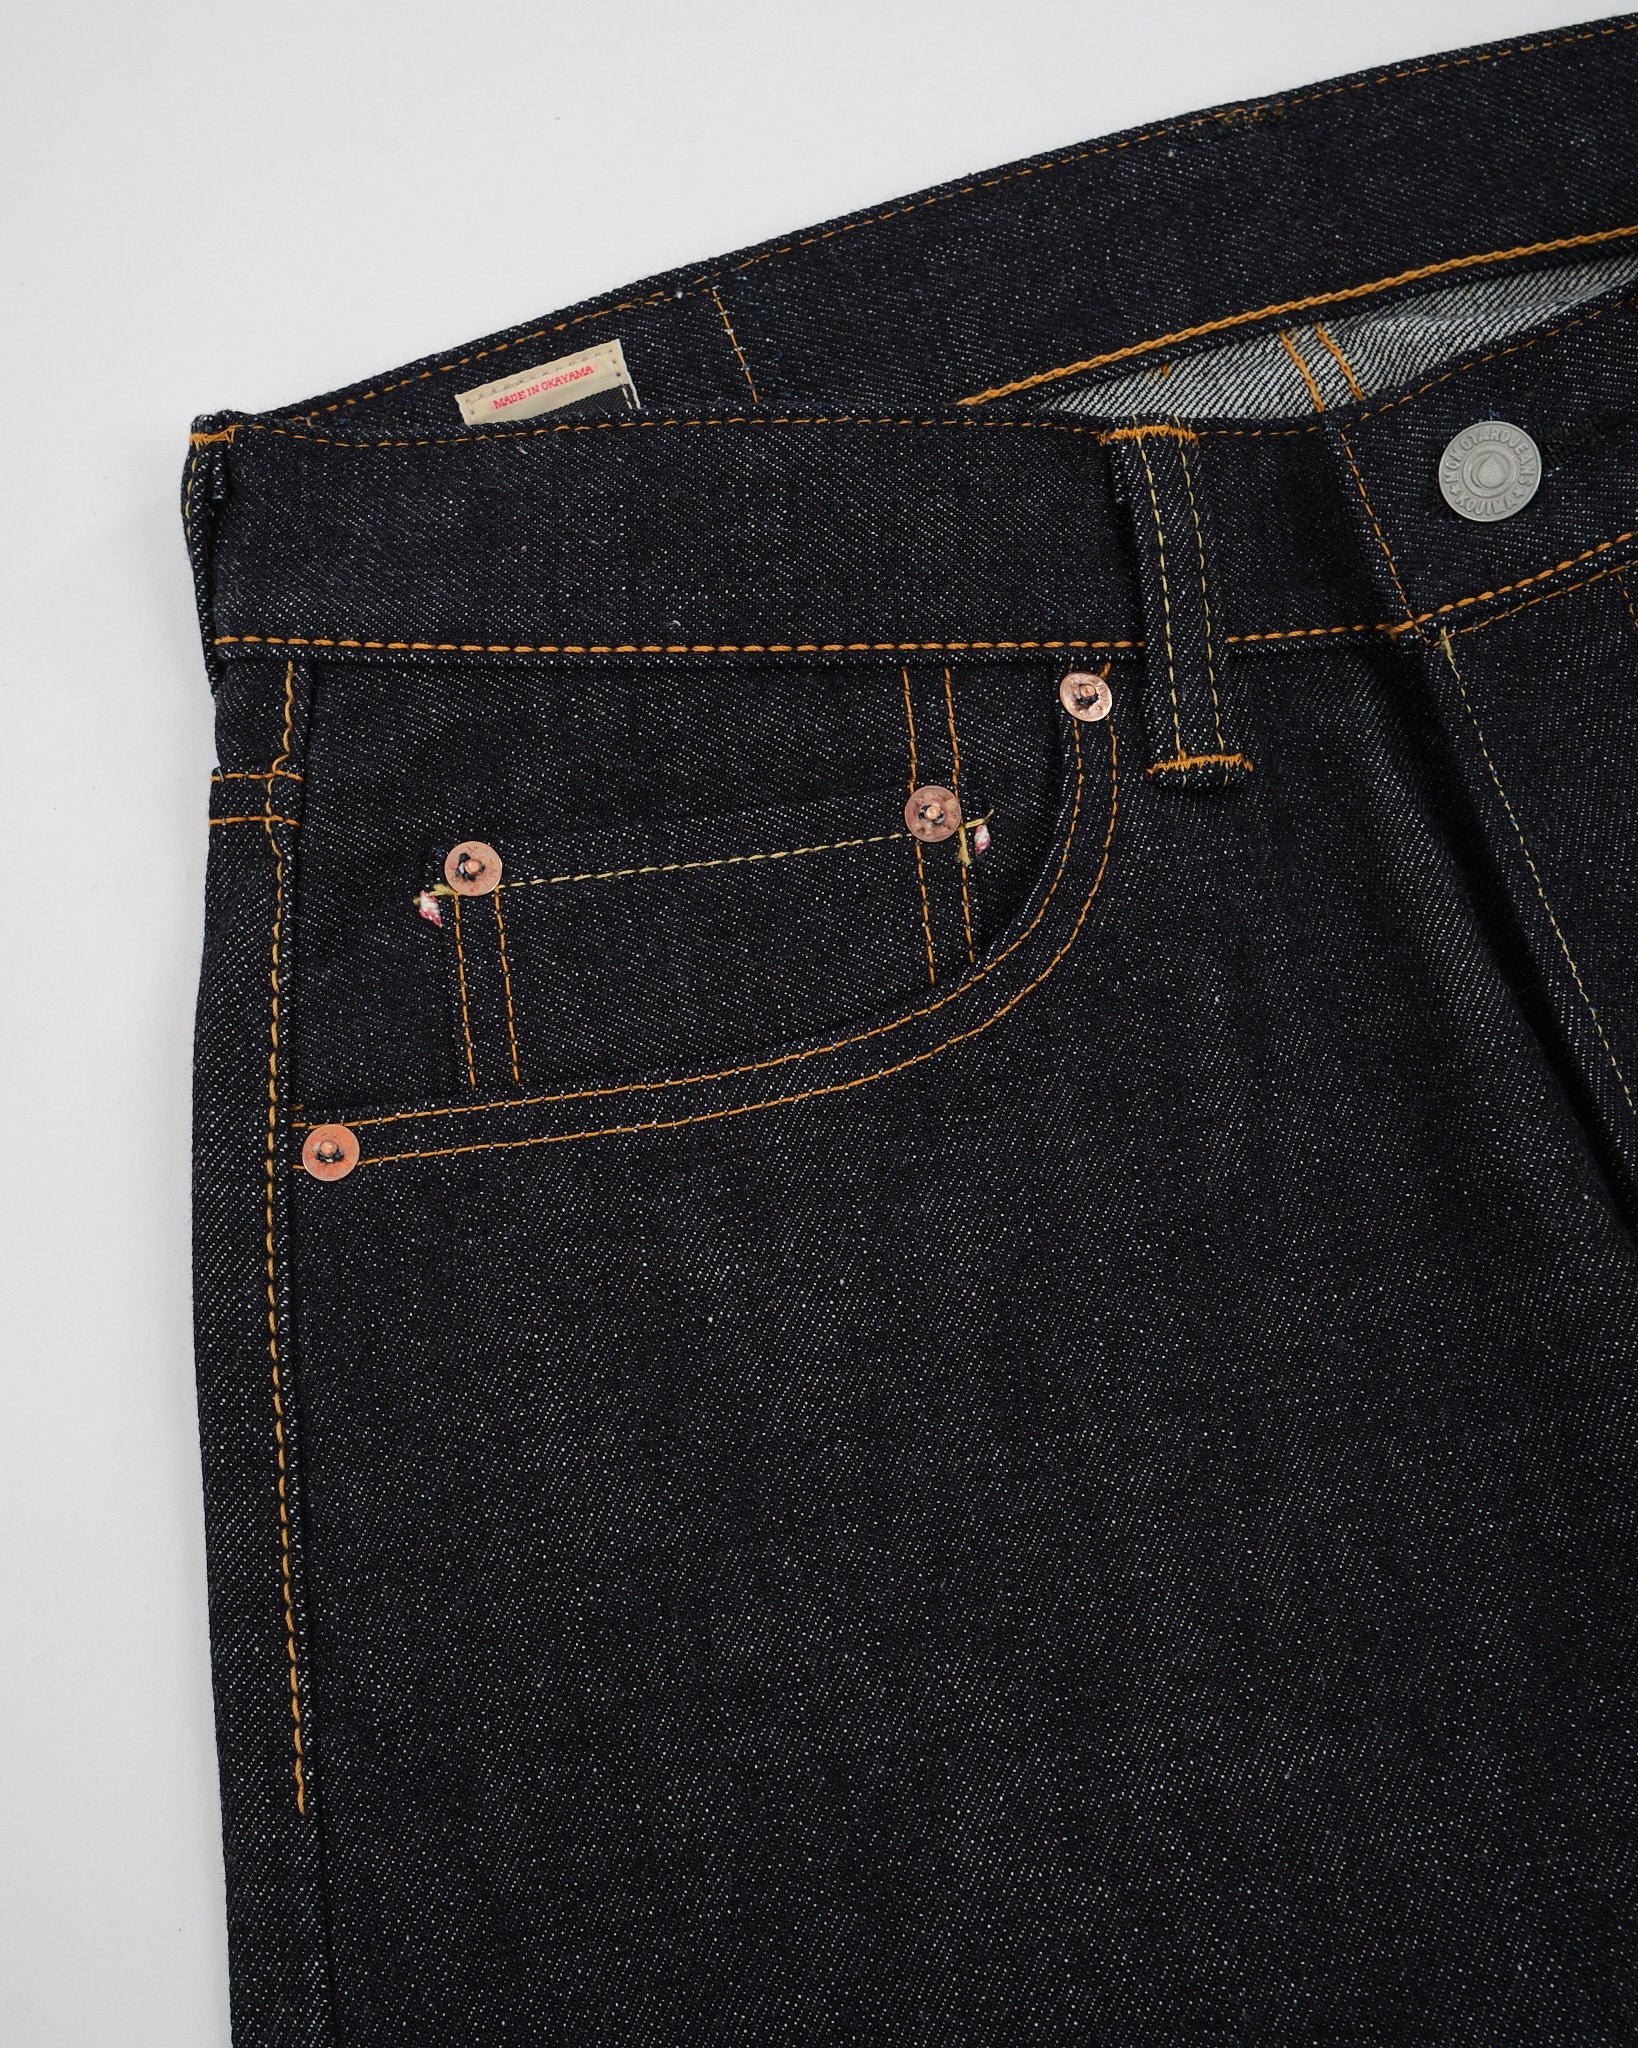 0405-V 15.7 oz Zimbabwe Cotton High Tapered Jeans